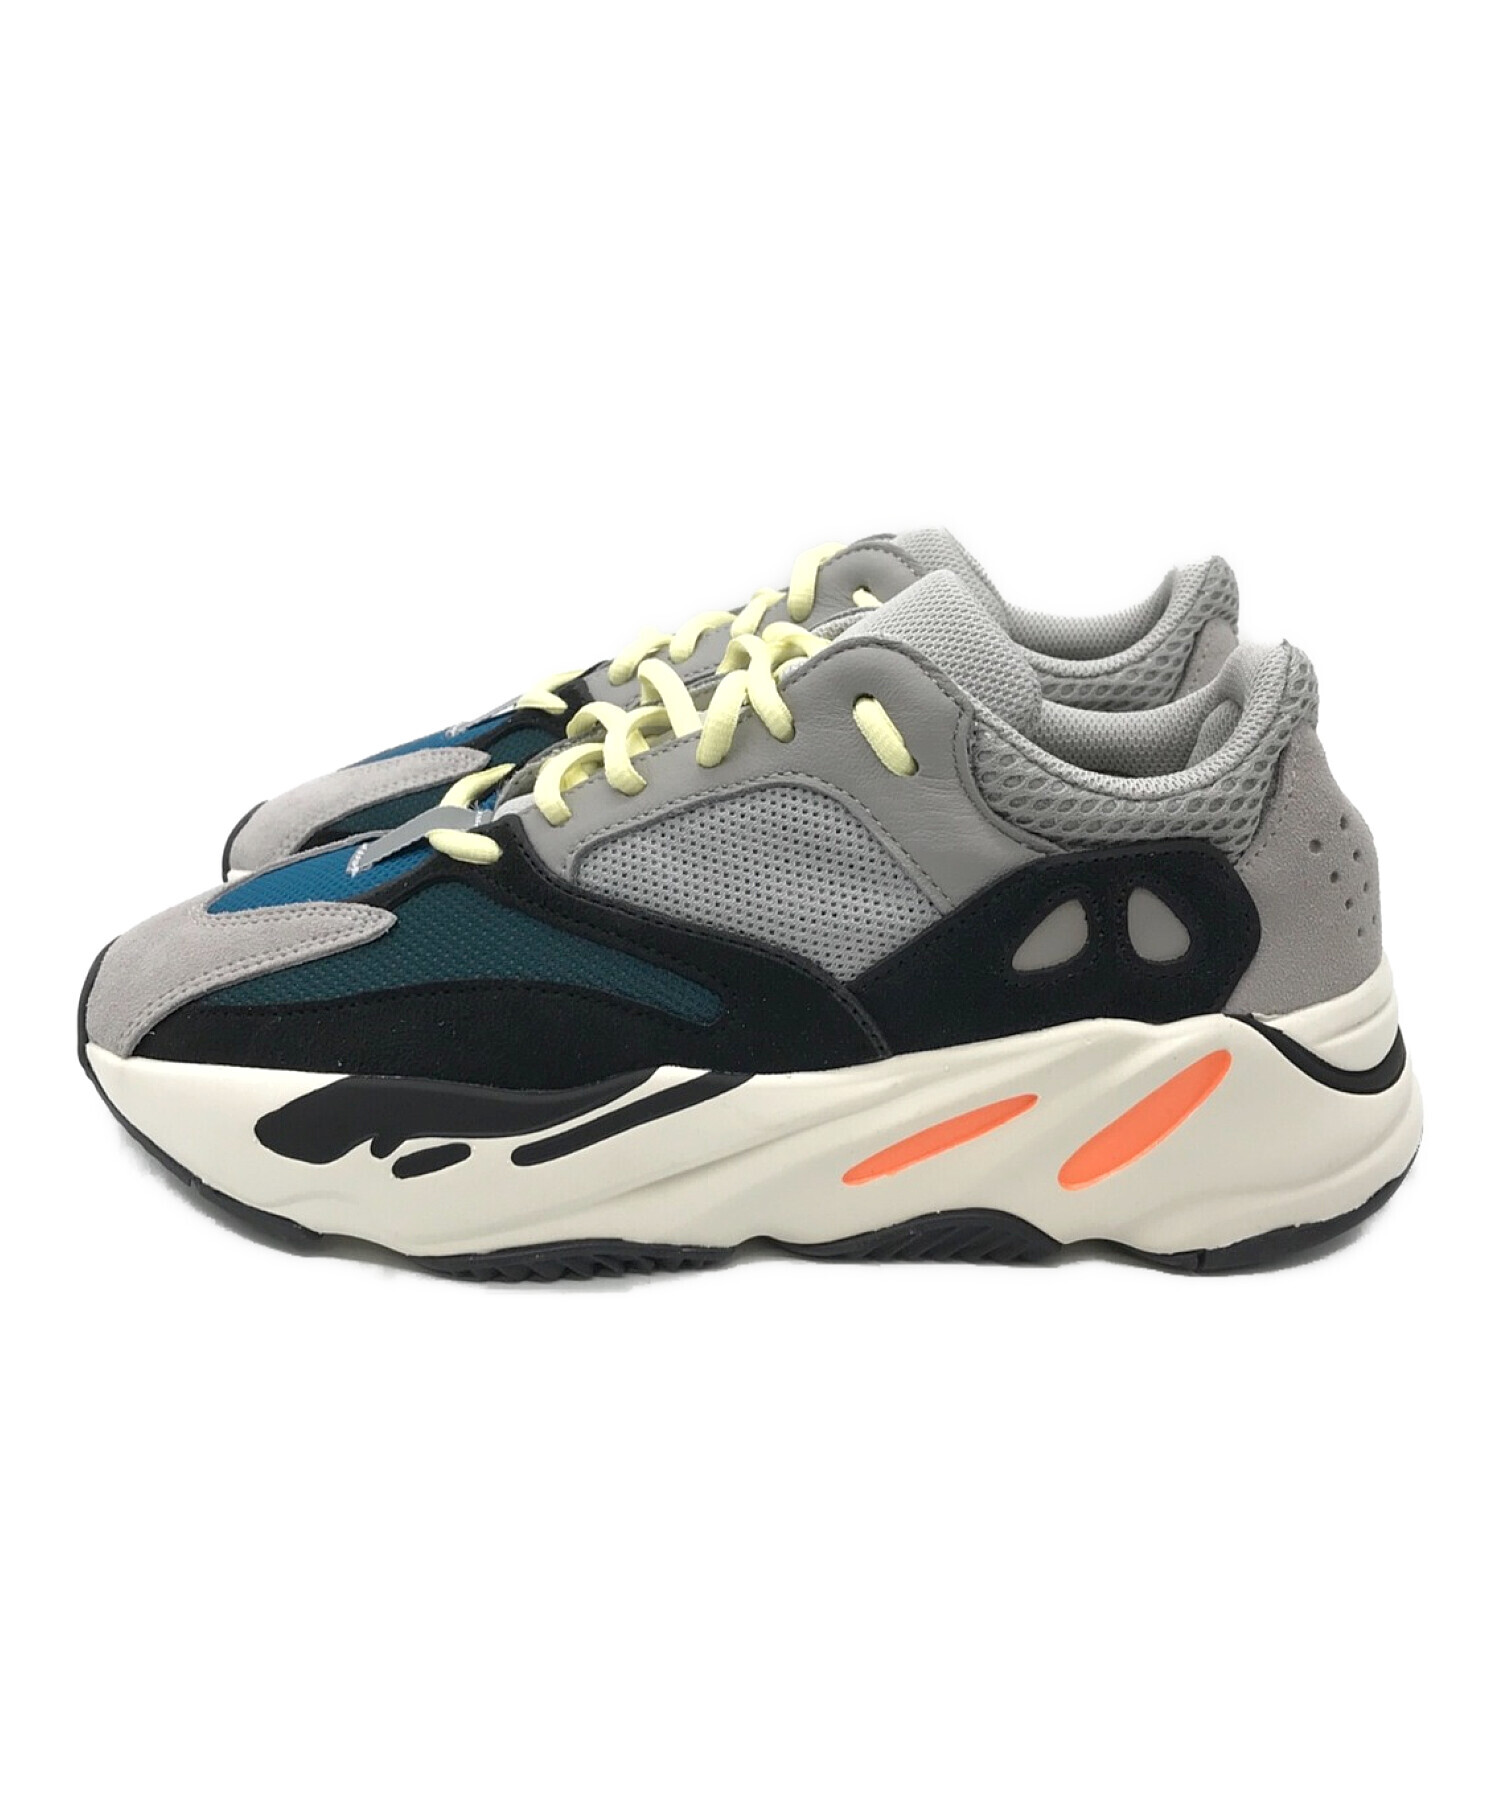 adidas (アディダス) YeezyBoost700 Wave Runner Solid Grey グレー サイズ:26cm